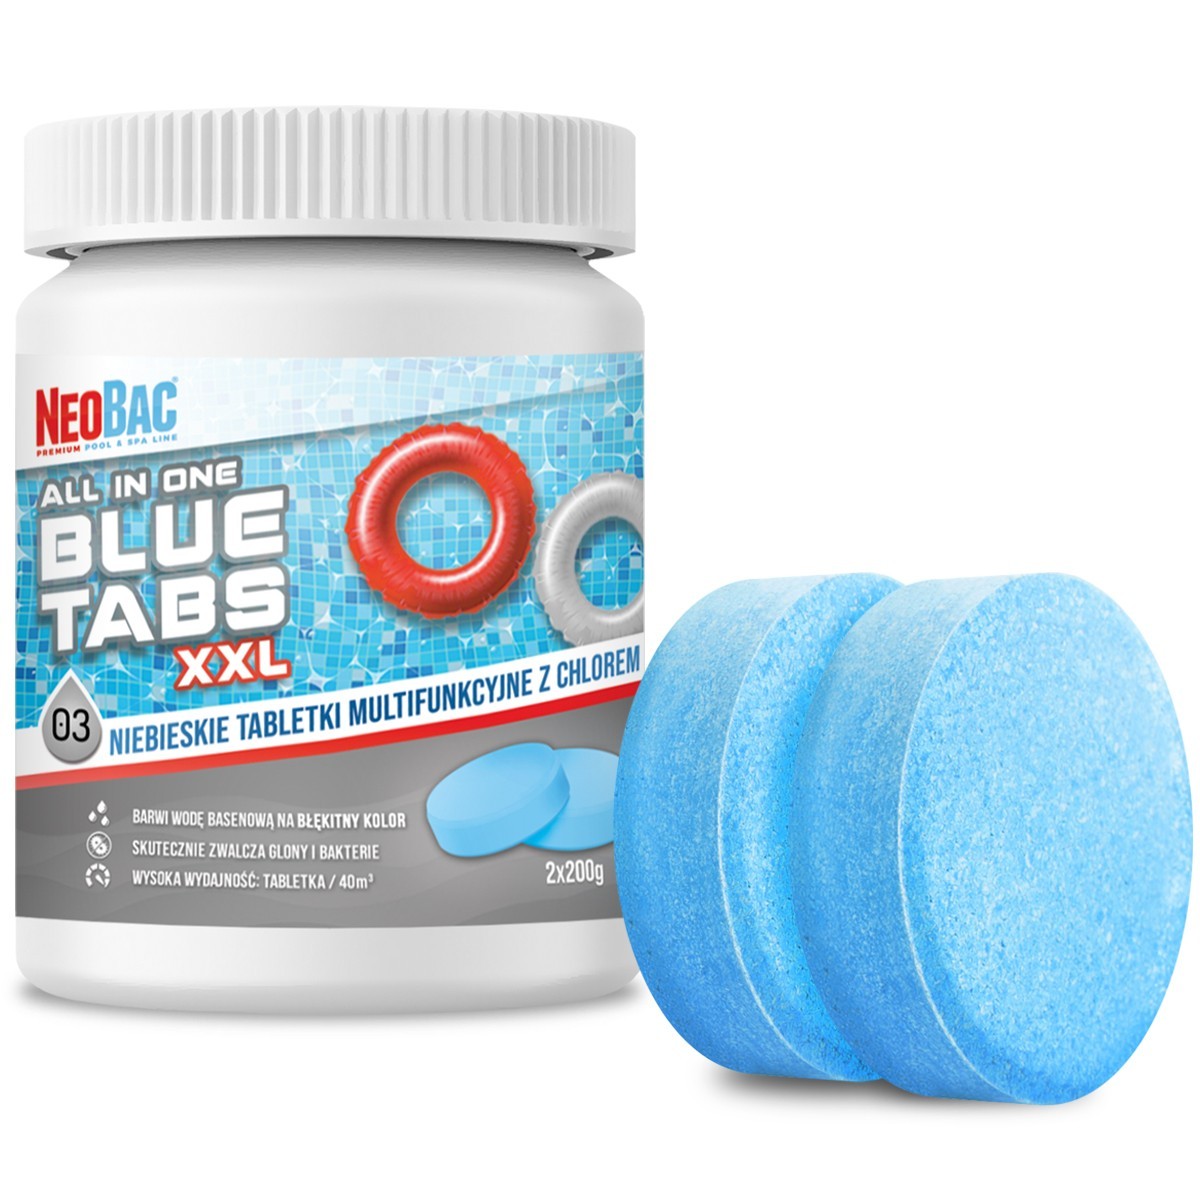 NeoBac allinOne blue TABS XXL chlor w tabletkach xxl